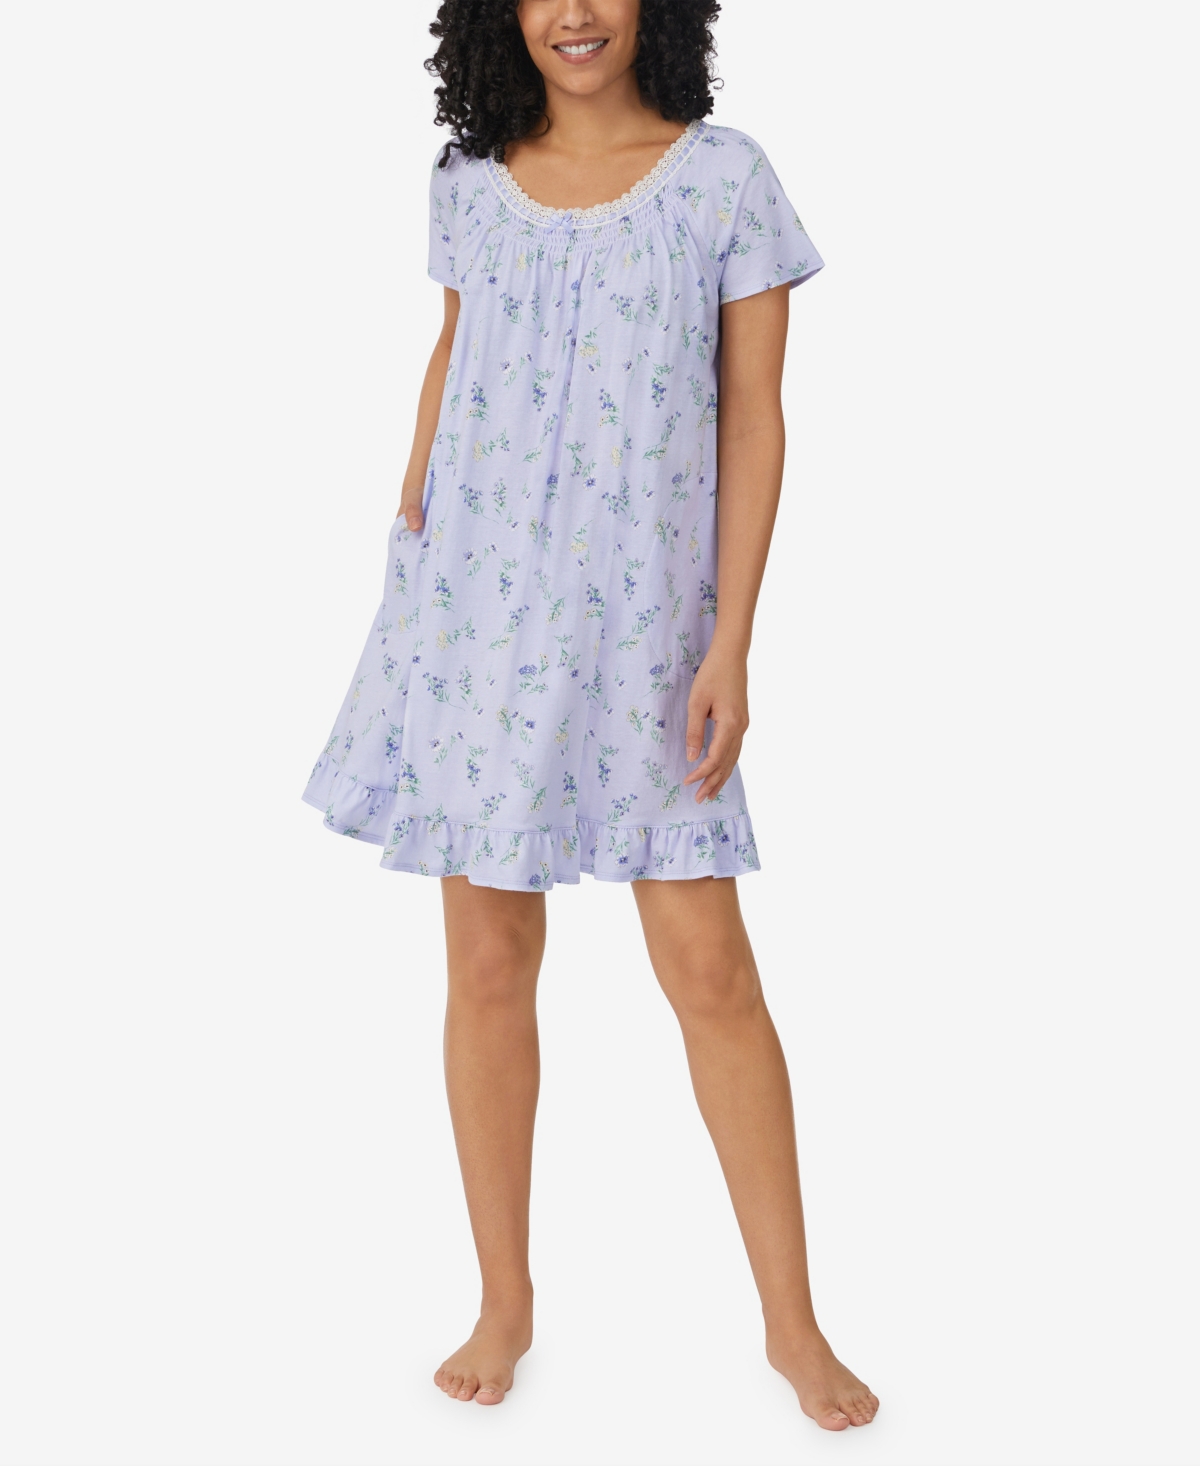 Aria Women's Cap Sleeve Short Sleepshirt Nightgown In Blue Floral